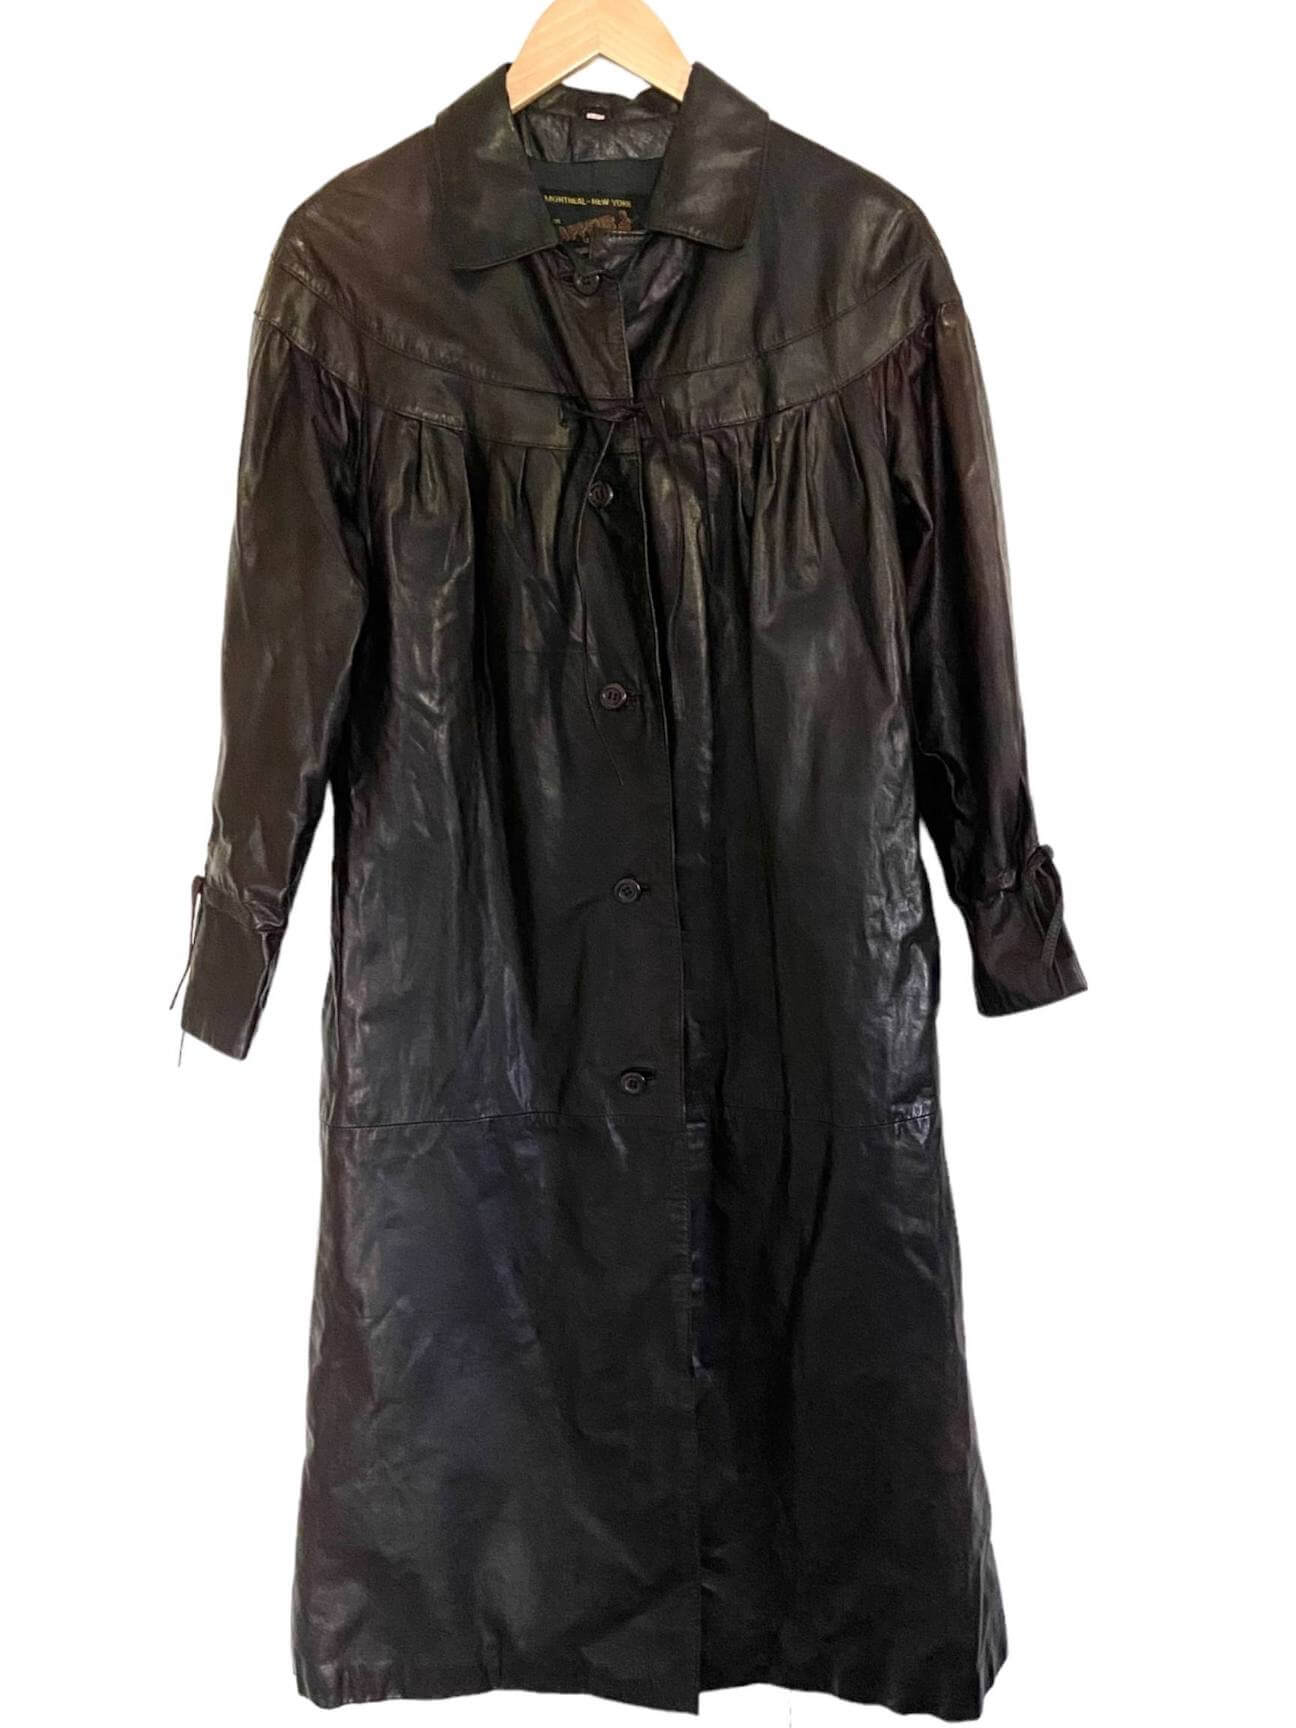 Dark Autumn tobacco brown RAPPEUR leather jacket